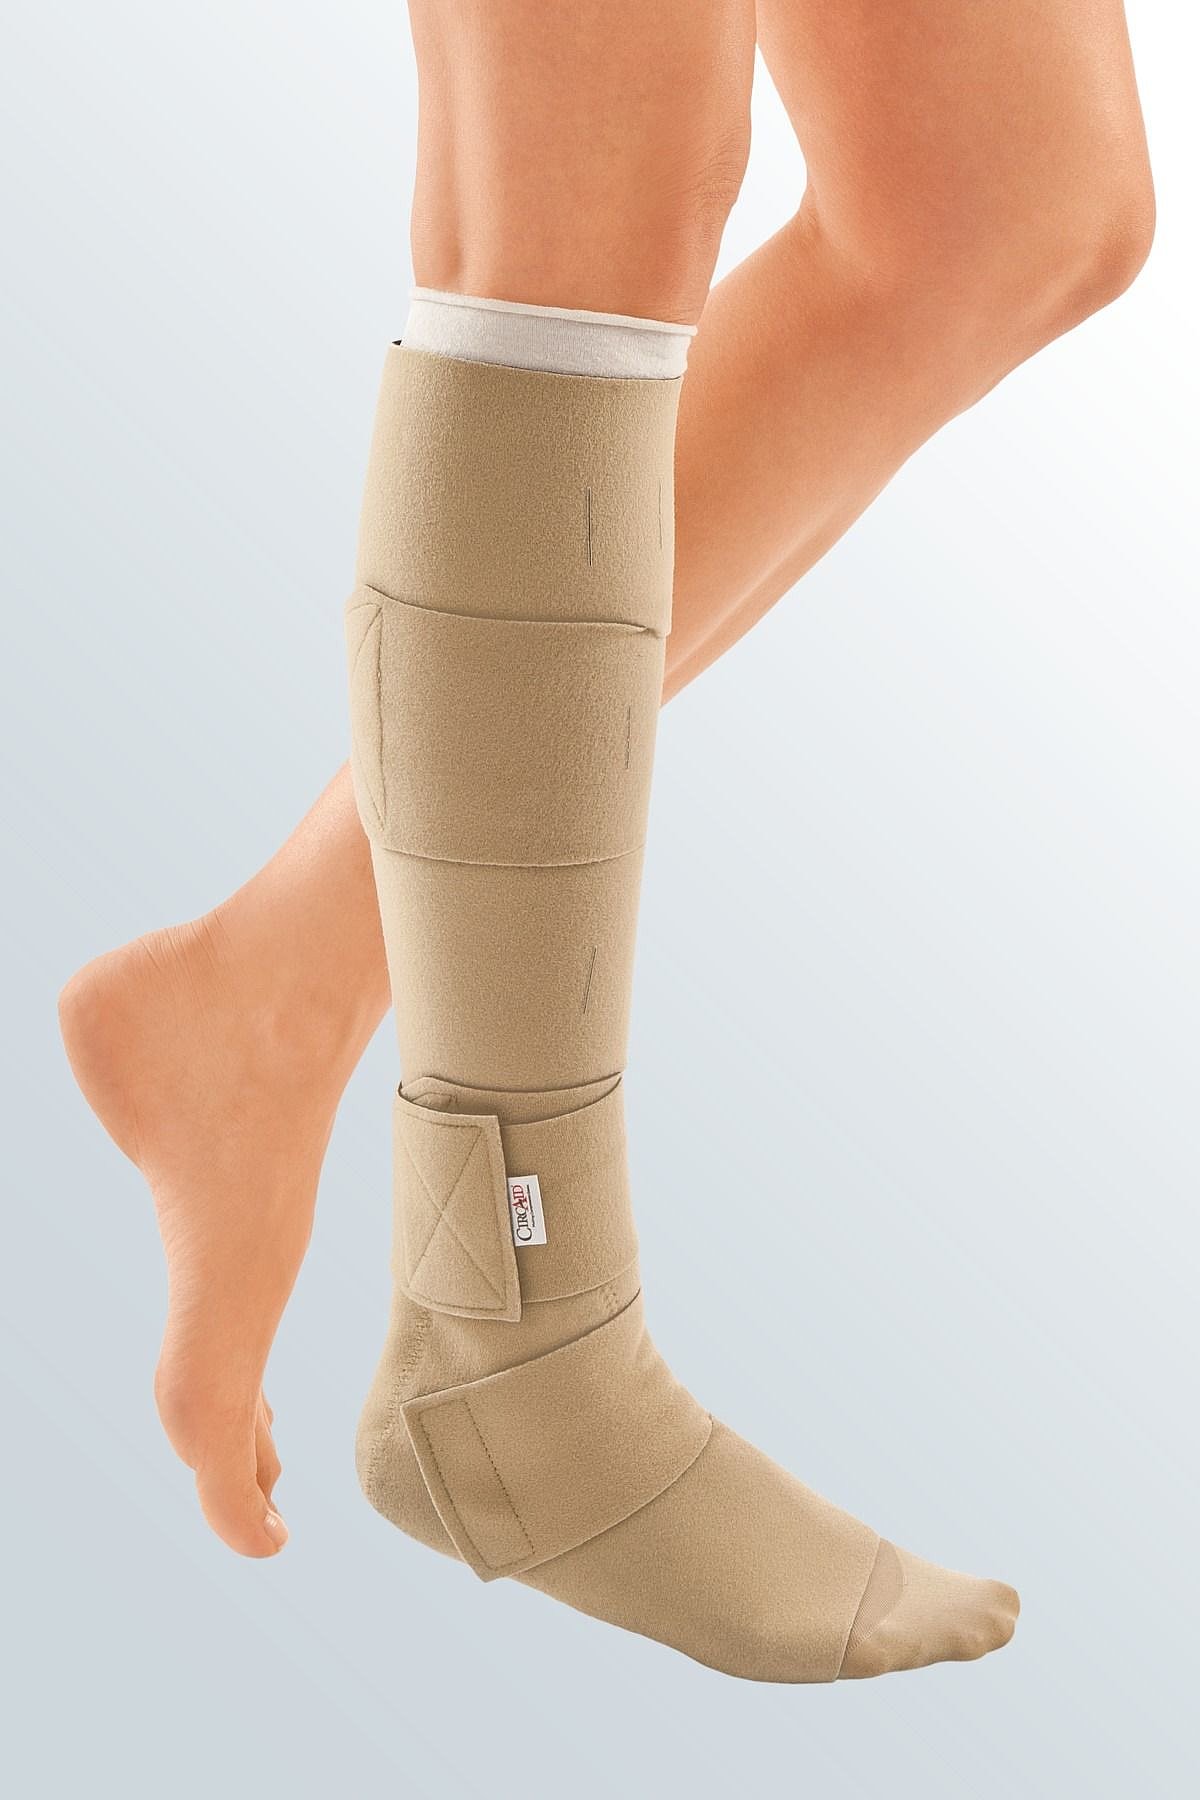  CircAid Juxtalite Lower Leg System – Easy to Use